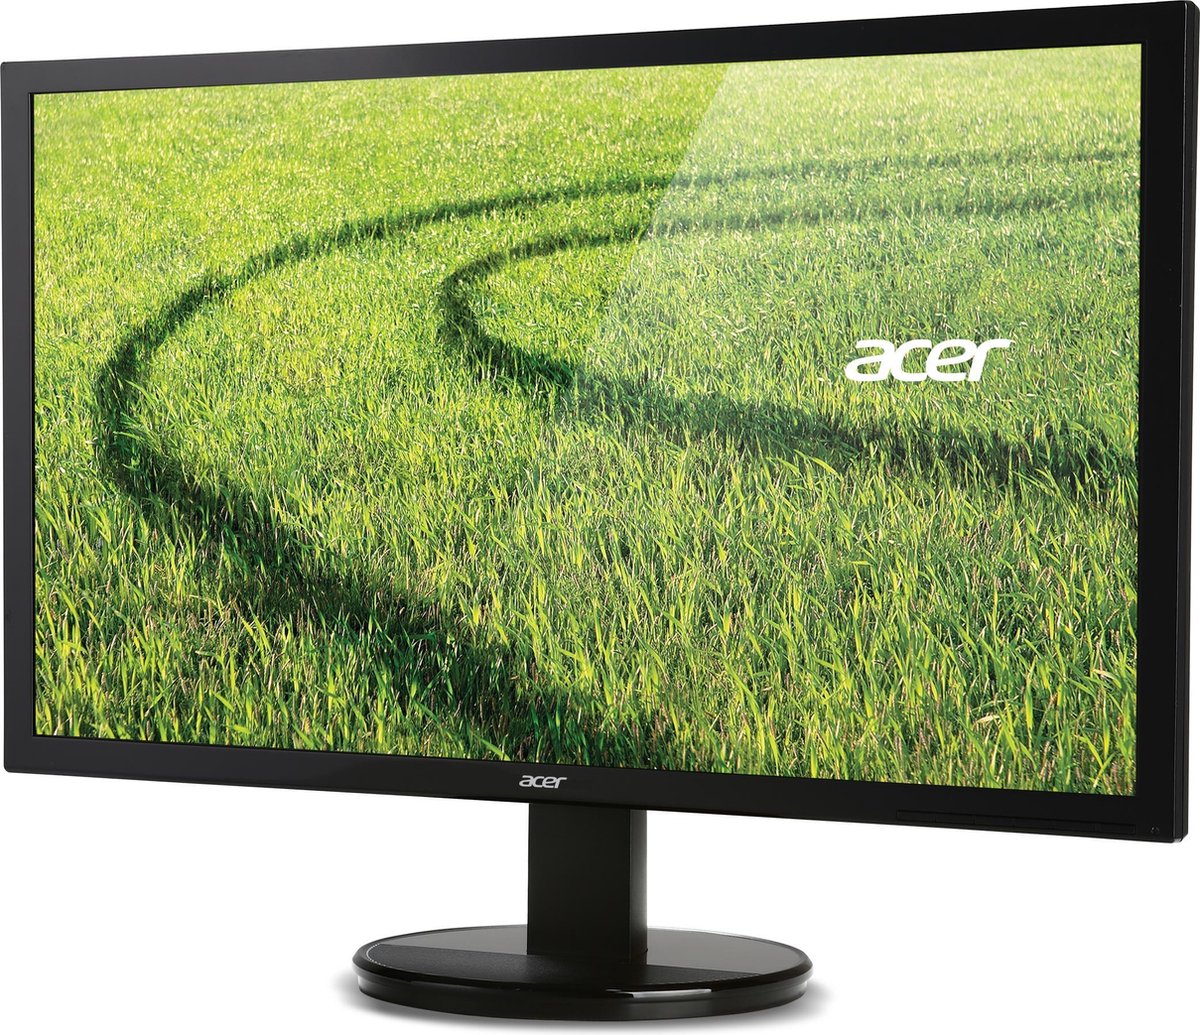 Acer K202HQL Monitor |